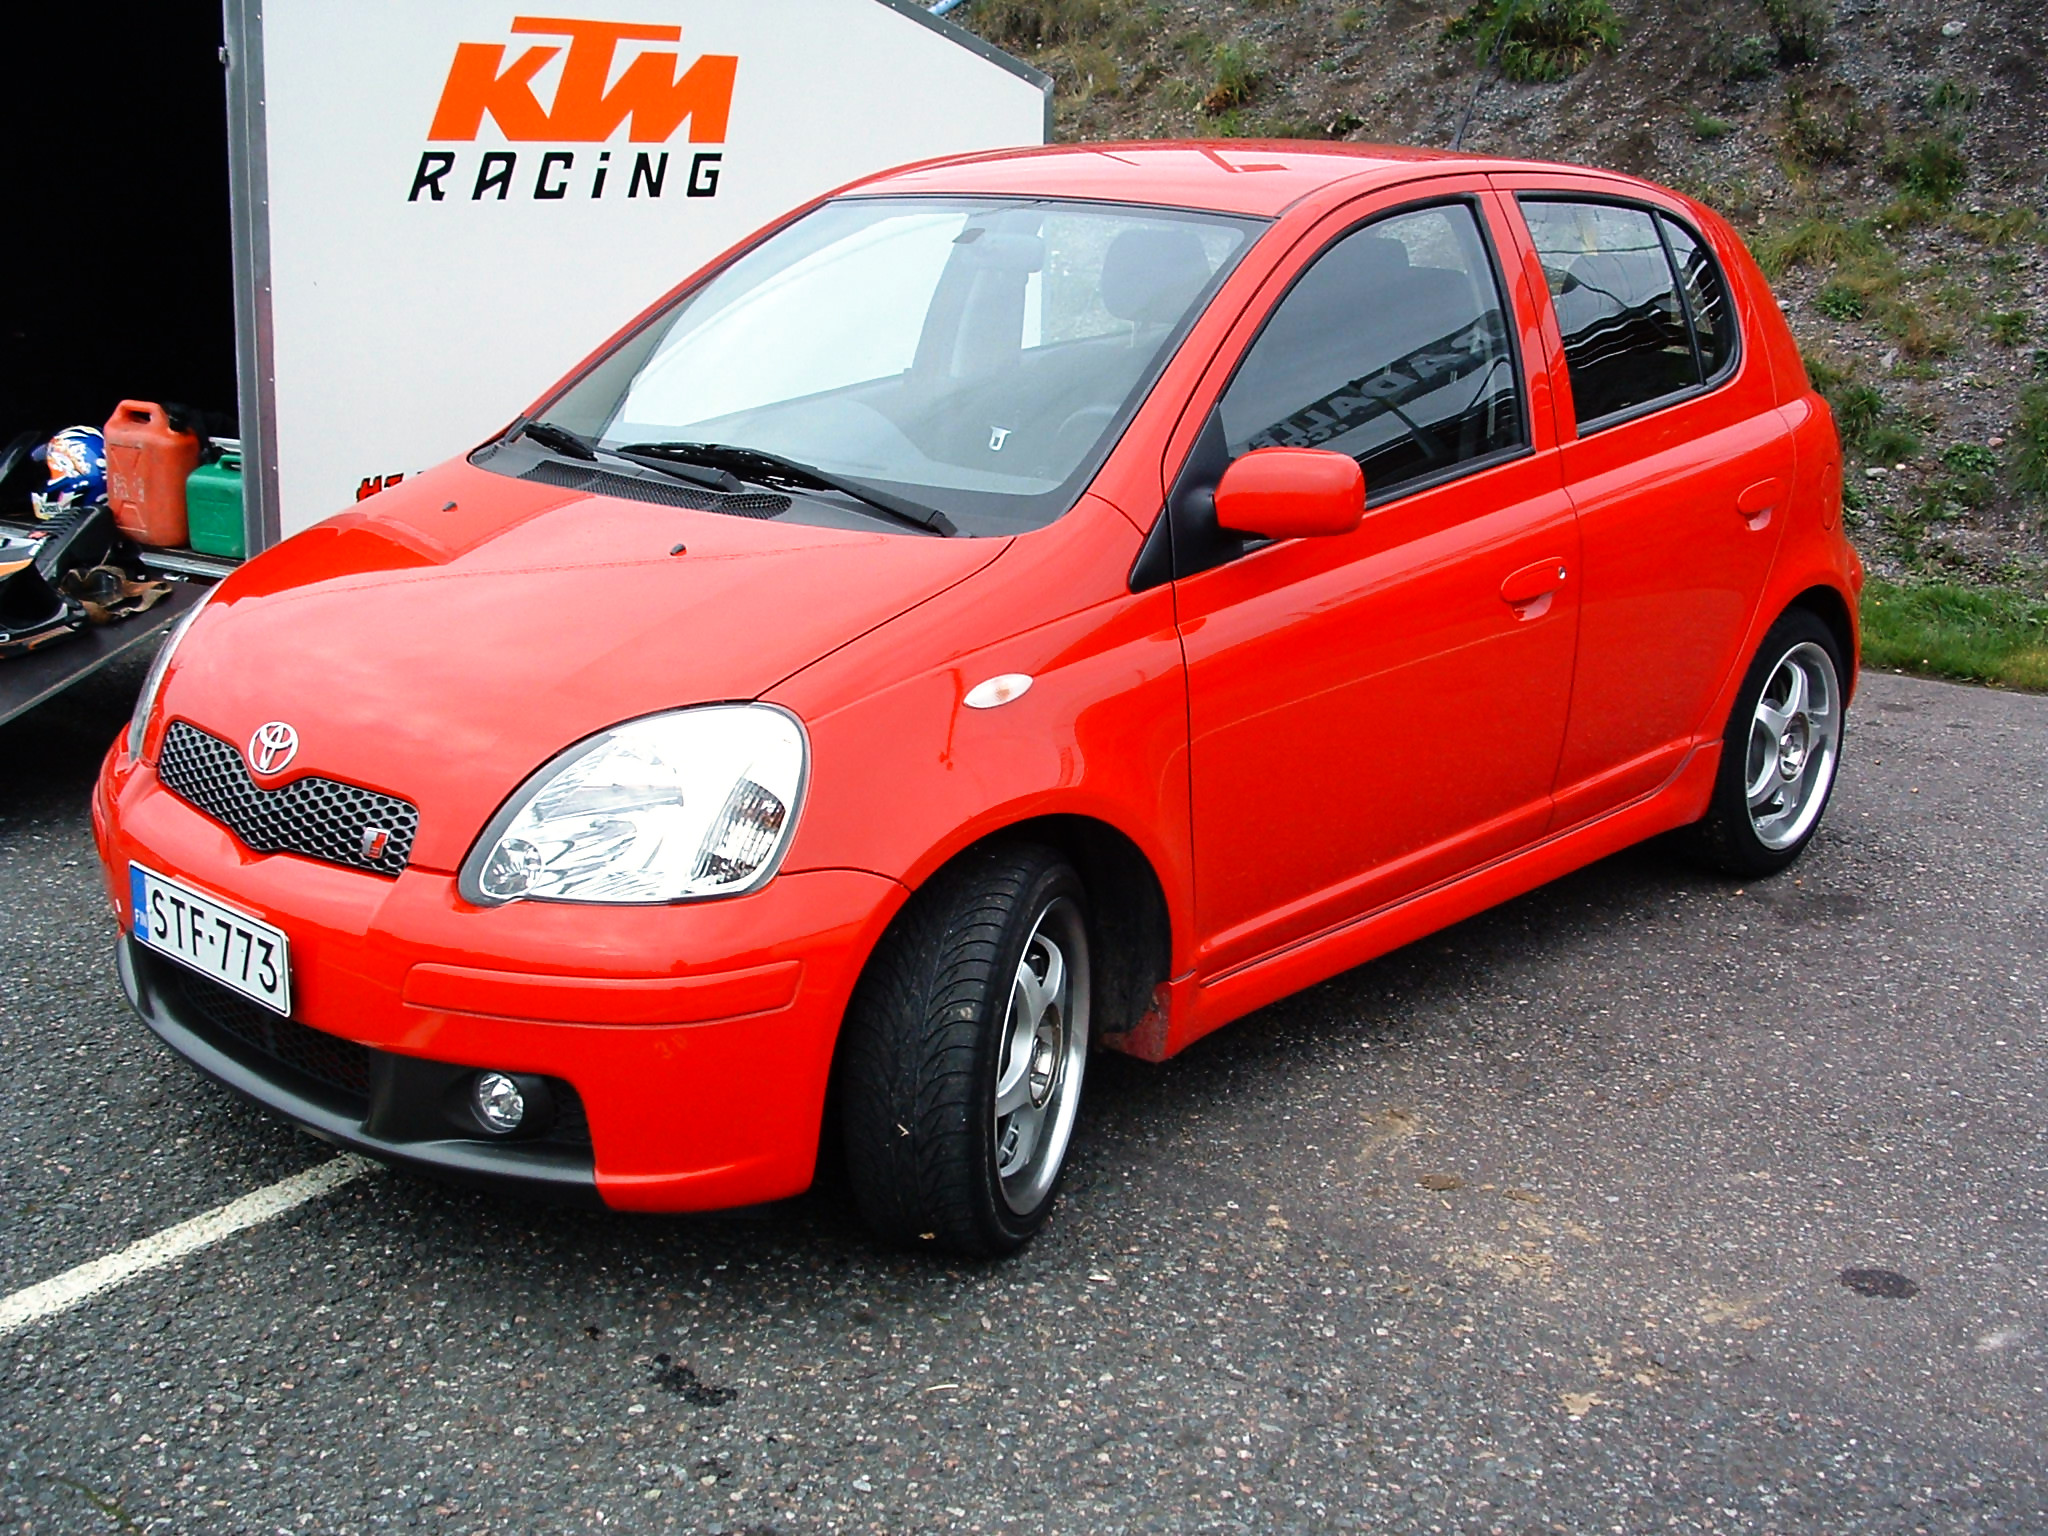 Radalle.com ratapÃ¤ivÃ¤ 3.10.2004, Punainen Toyota Yaris